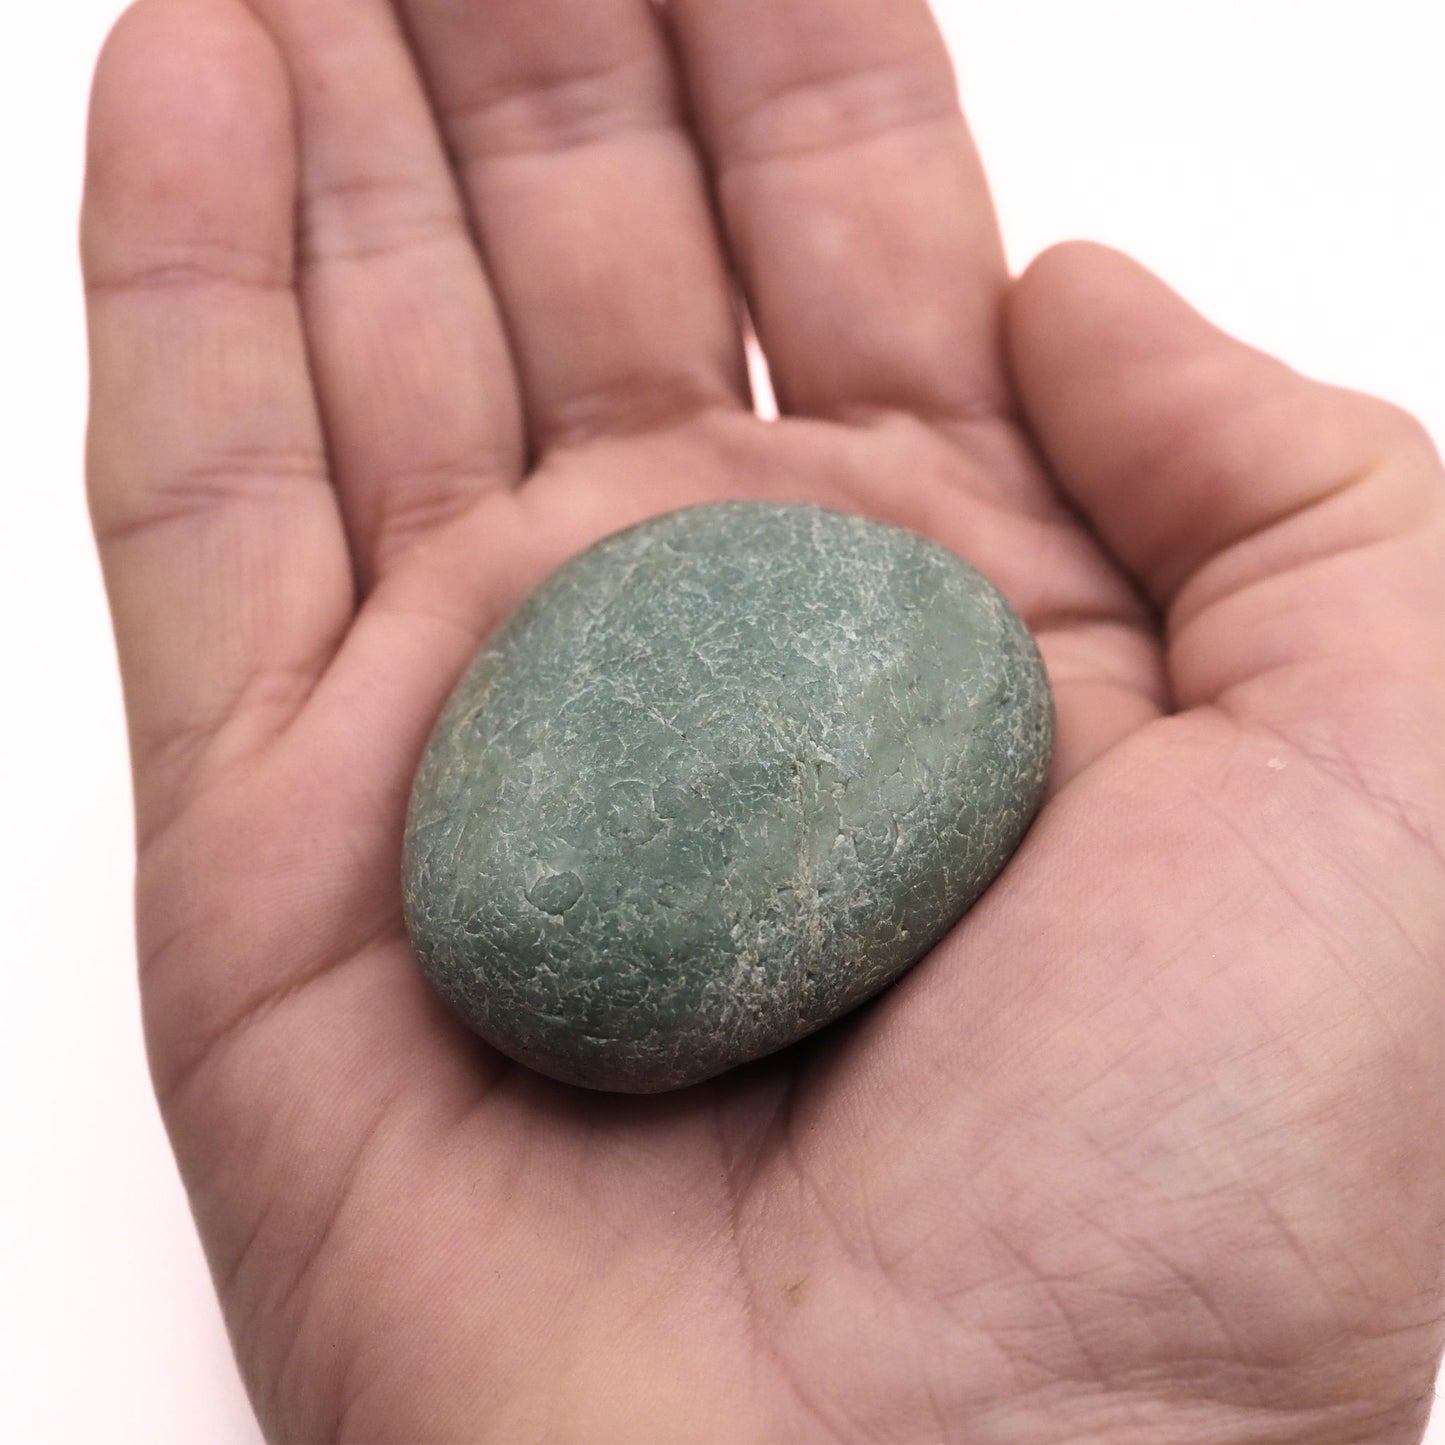 Green Jasper palm stone in hand